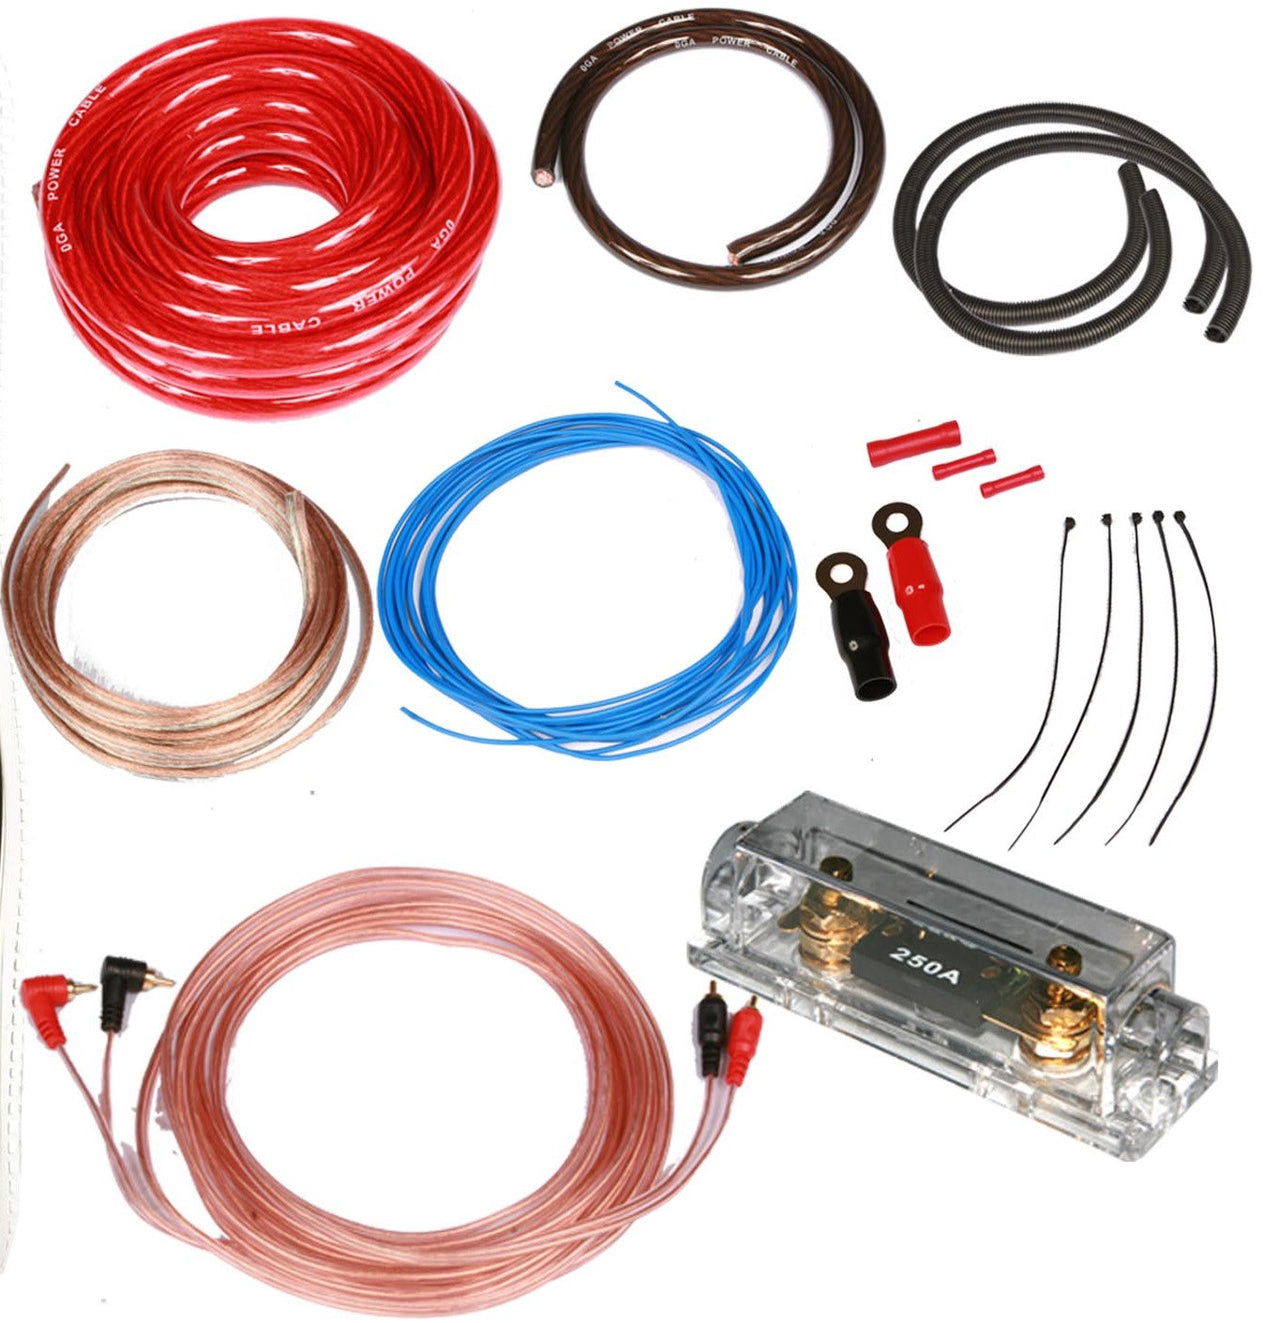 6000W 0 Gauge Amp Kit Amplifier Install Wiring Hot 0 Ga Car Wires Red